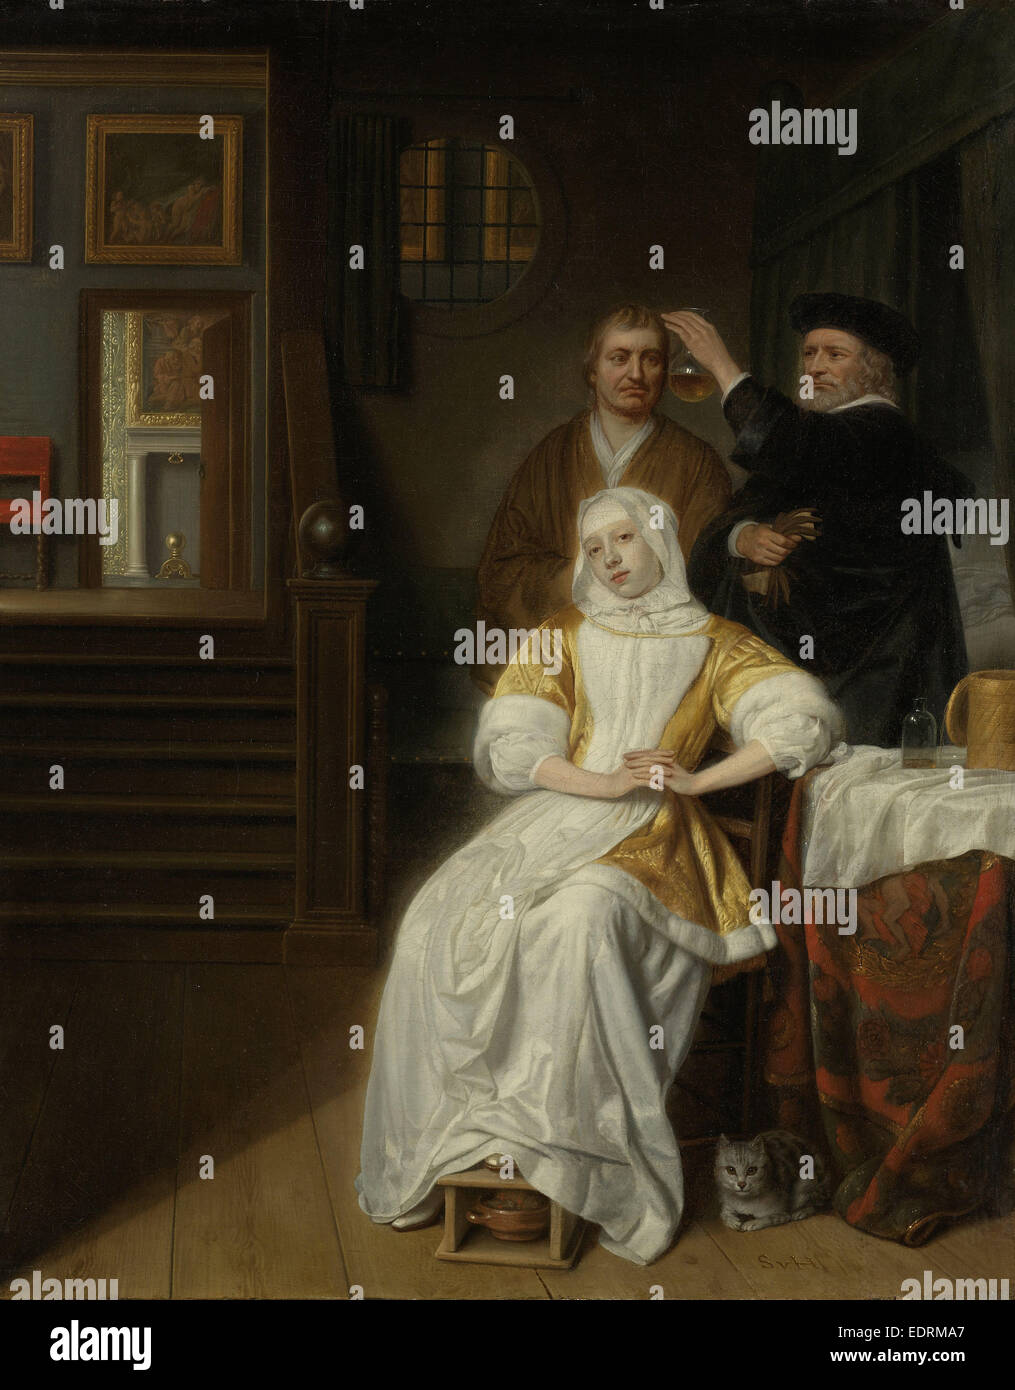 The Anemic Lady, Sick Lady, Samuel van Hoogstraten, 1660 - 1678 Stock Photo